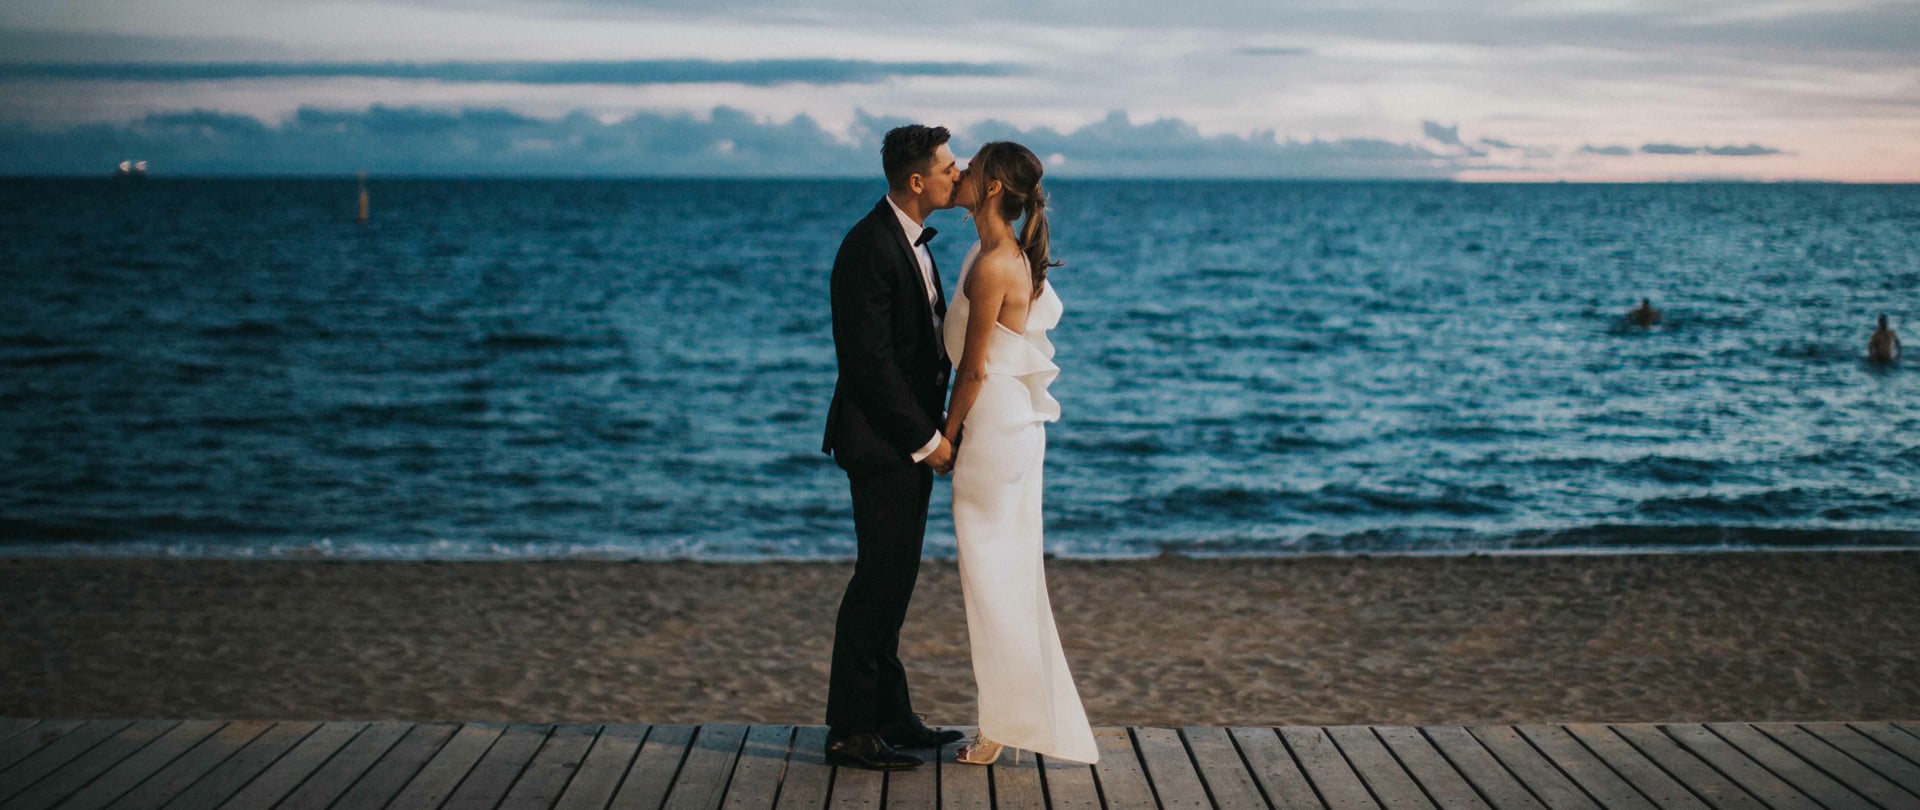 Monika & Brendon Wedding Video Filmed at Melbourne, Victoria